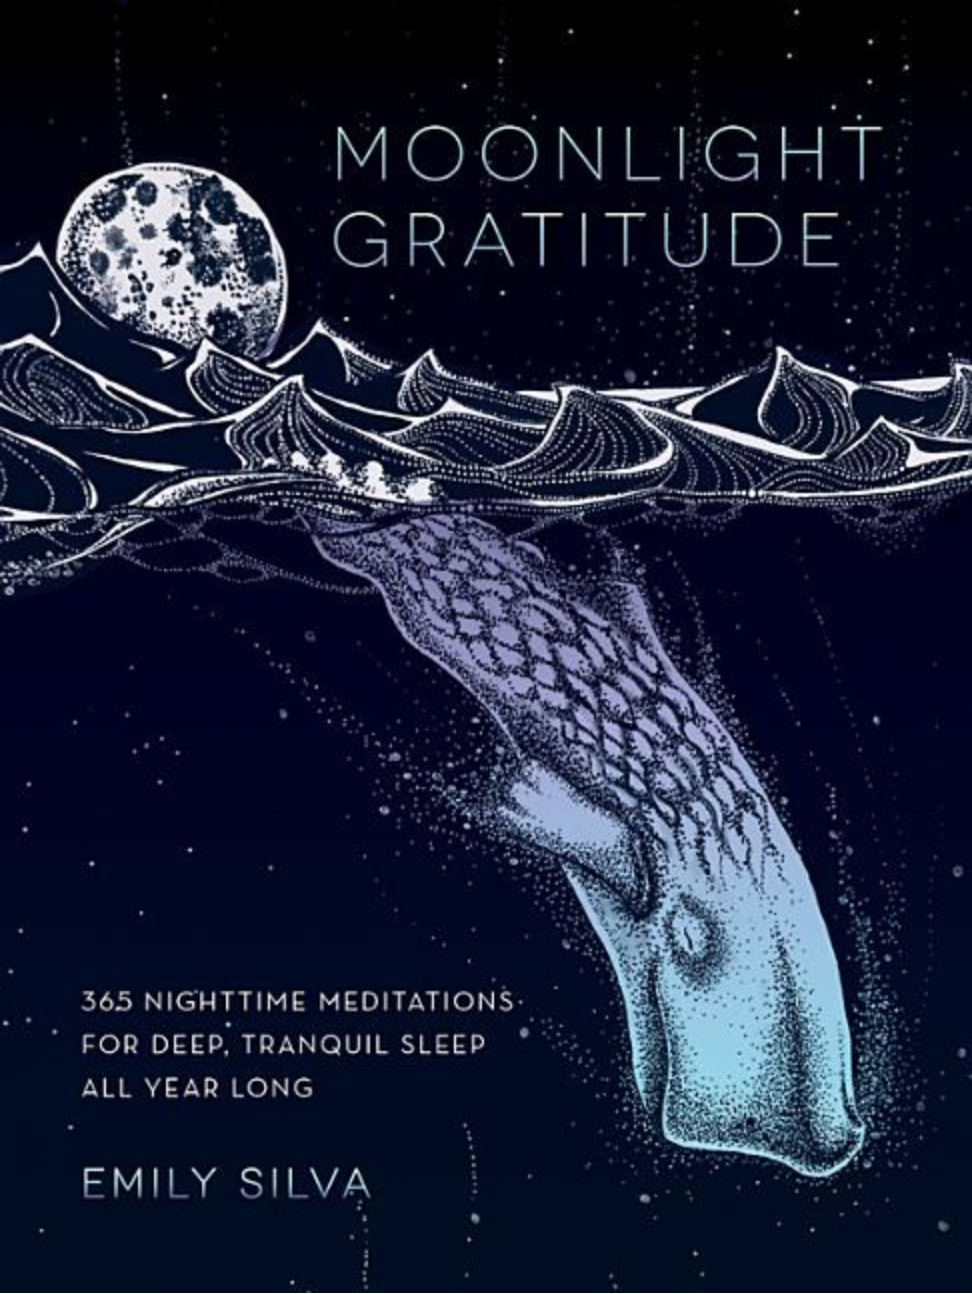 Moonlight Gratitude: 365 Nighttime Meditations for Deep, Tranquil Sleep All Year Long (Daily Gratitude #1) (Alt Summit)